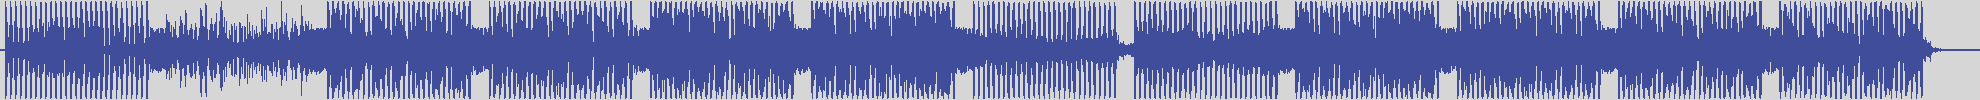 nf_boyz_records [NFY079] David Rimmel - Free Mind [Private Sax Mix] audio wave form